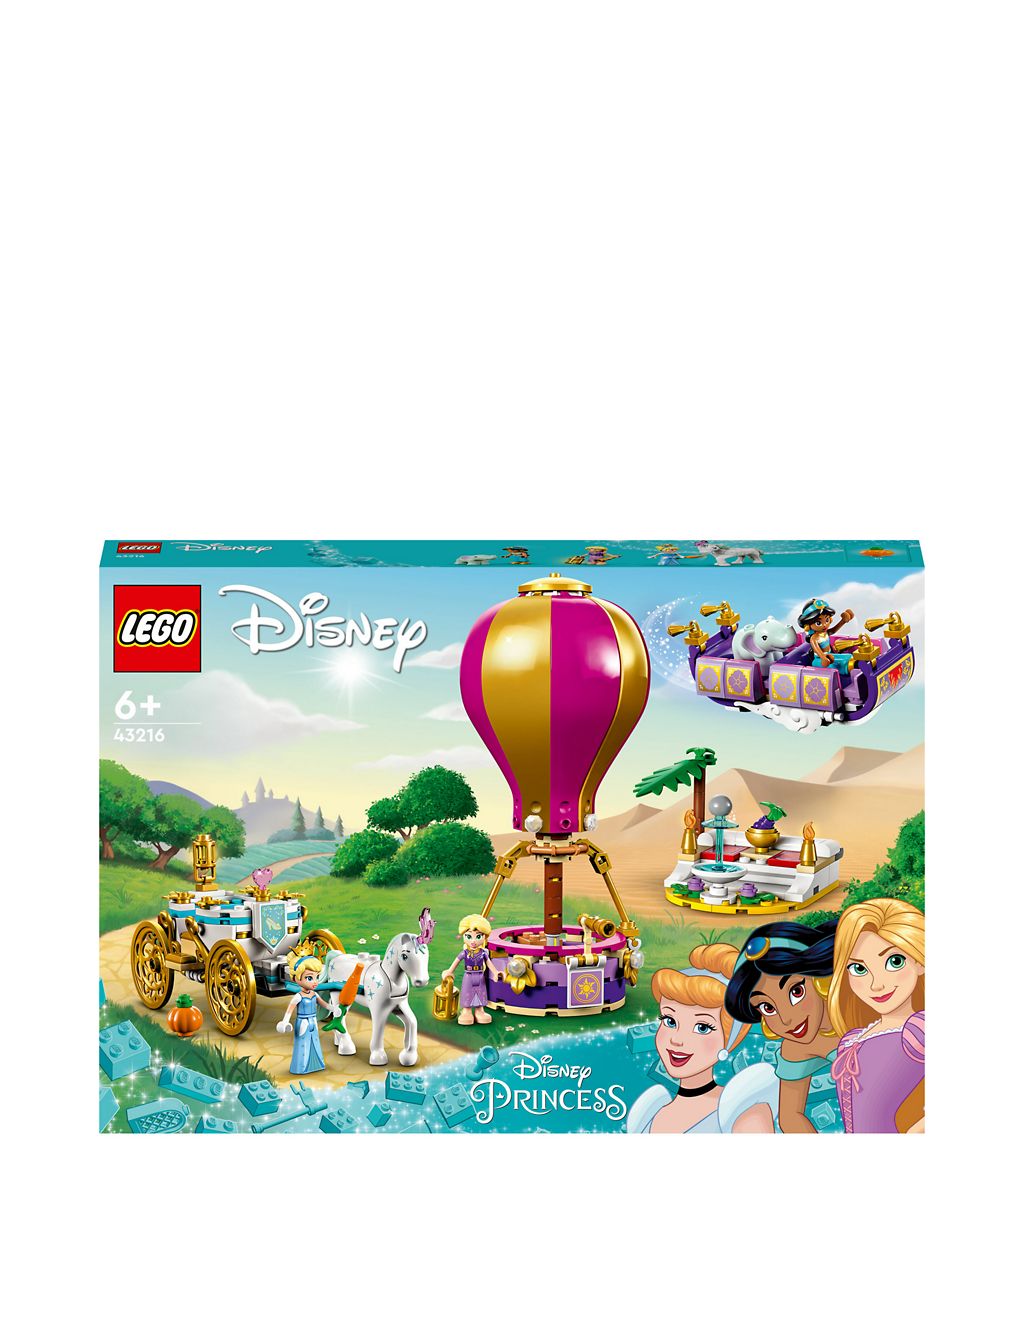 LEGO Disney Princess Enchanted Journey Playset 43216 (6+ Yrs) 1 of 7